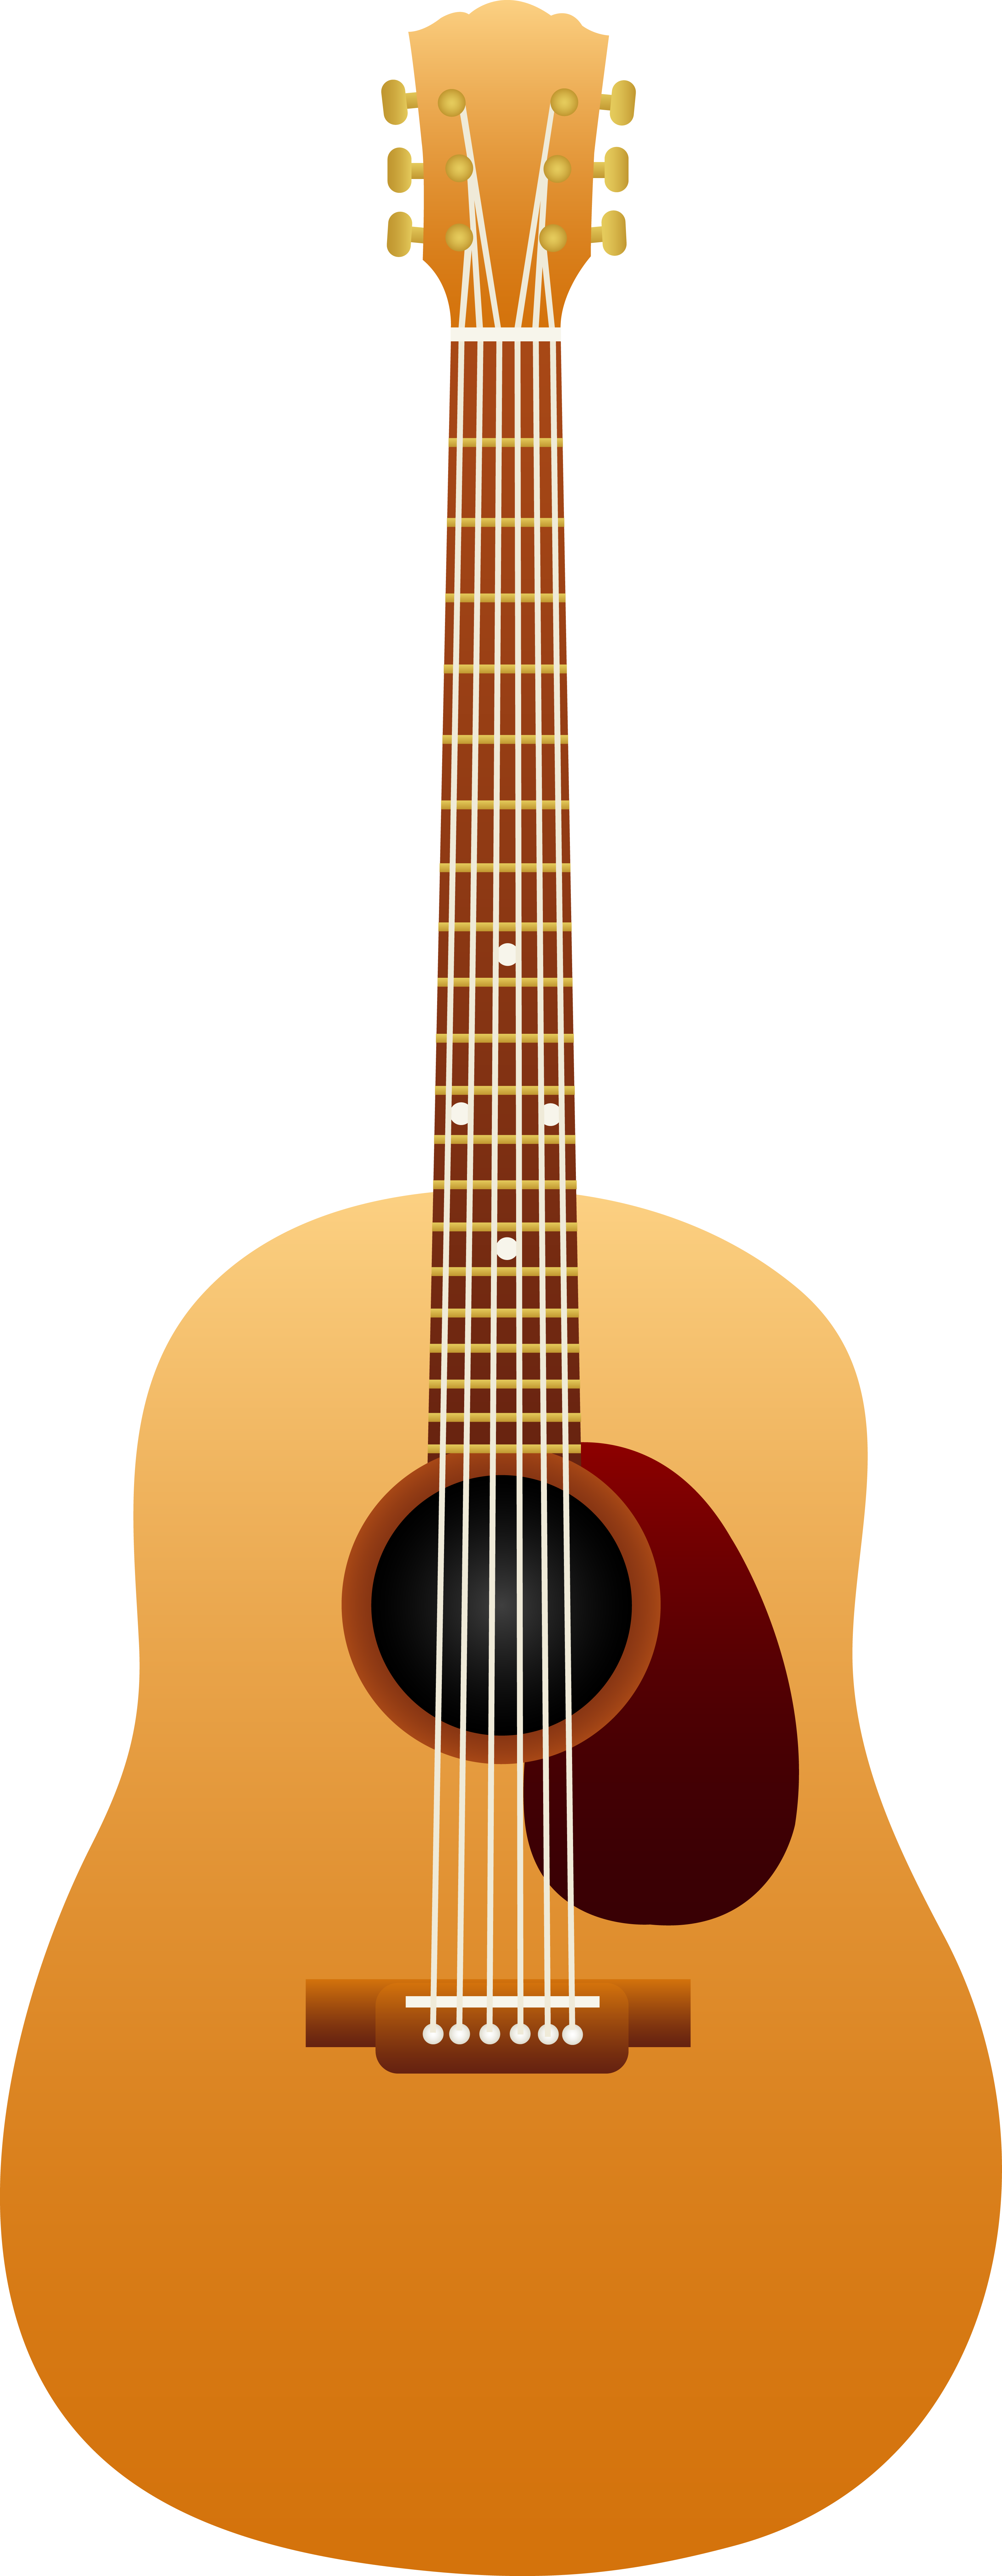 Classical Acoustic Wooden Guitar Free Clip Art